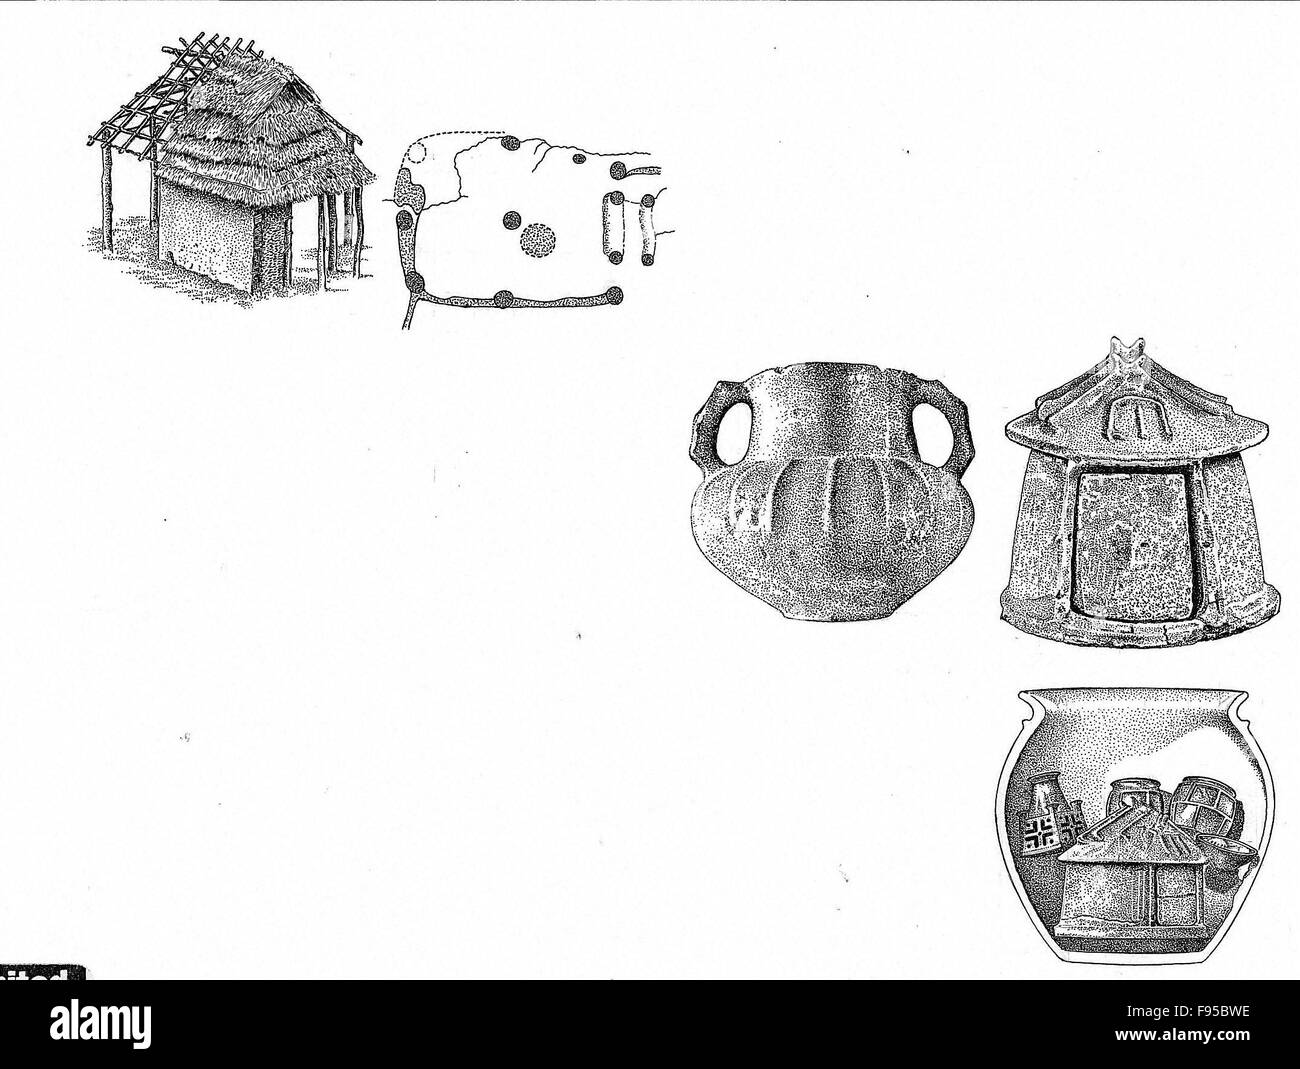 Iron age hut and hot urns. Stock Photo